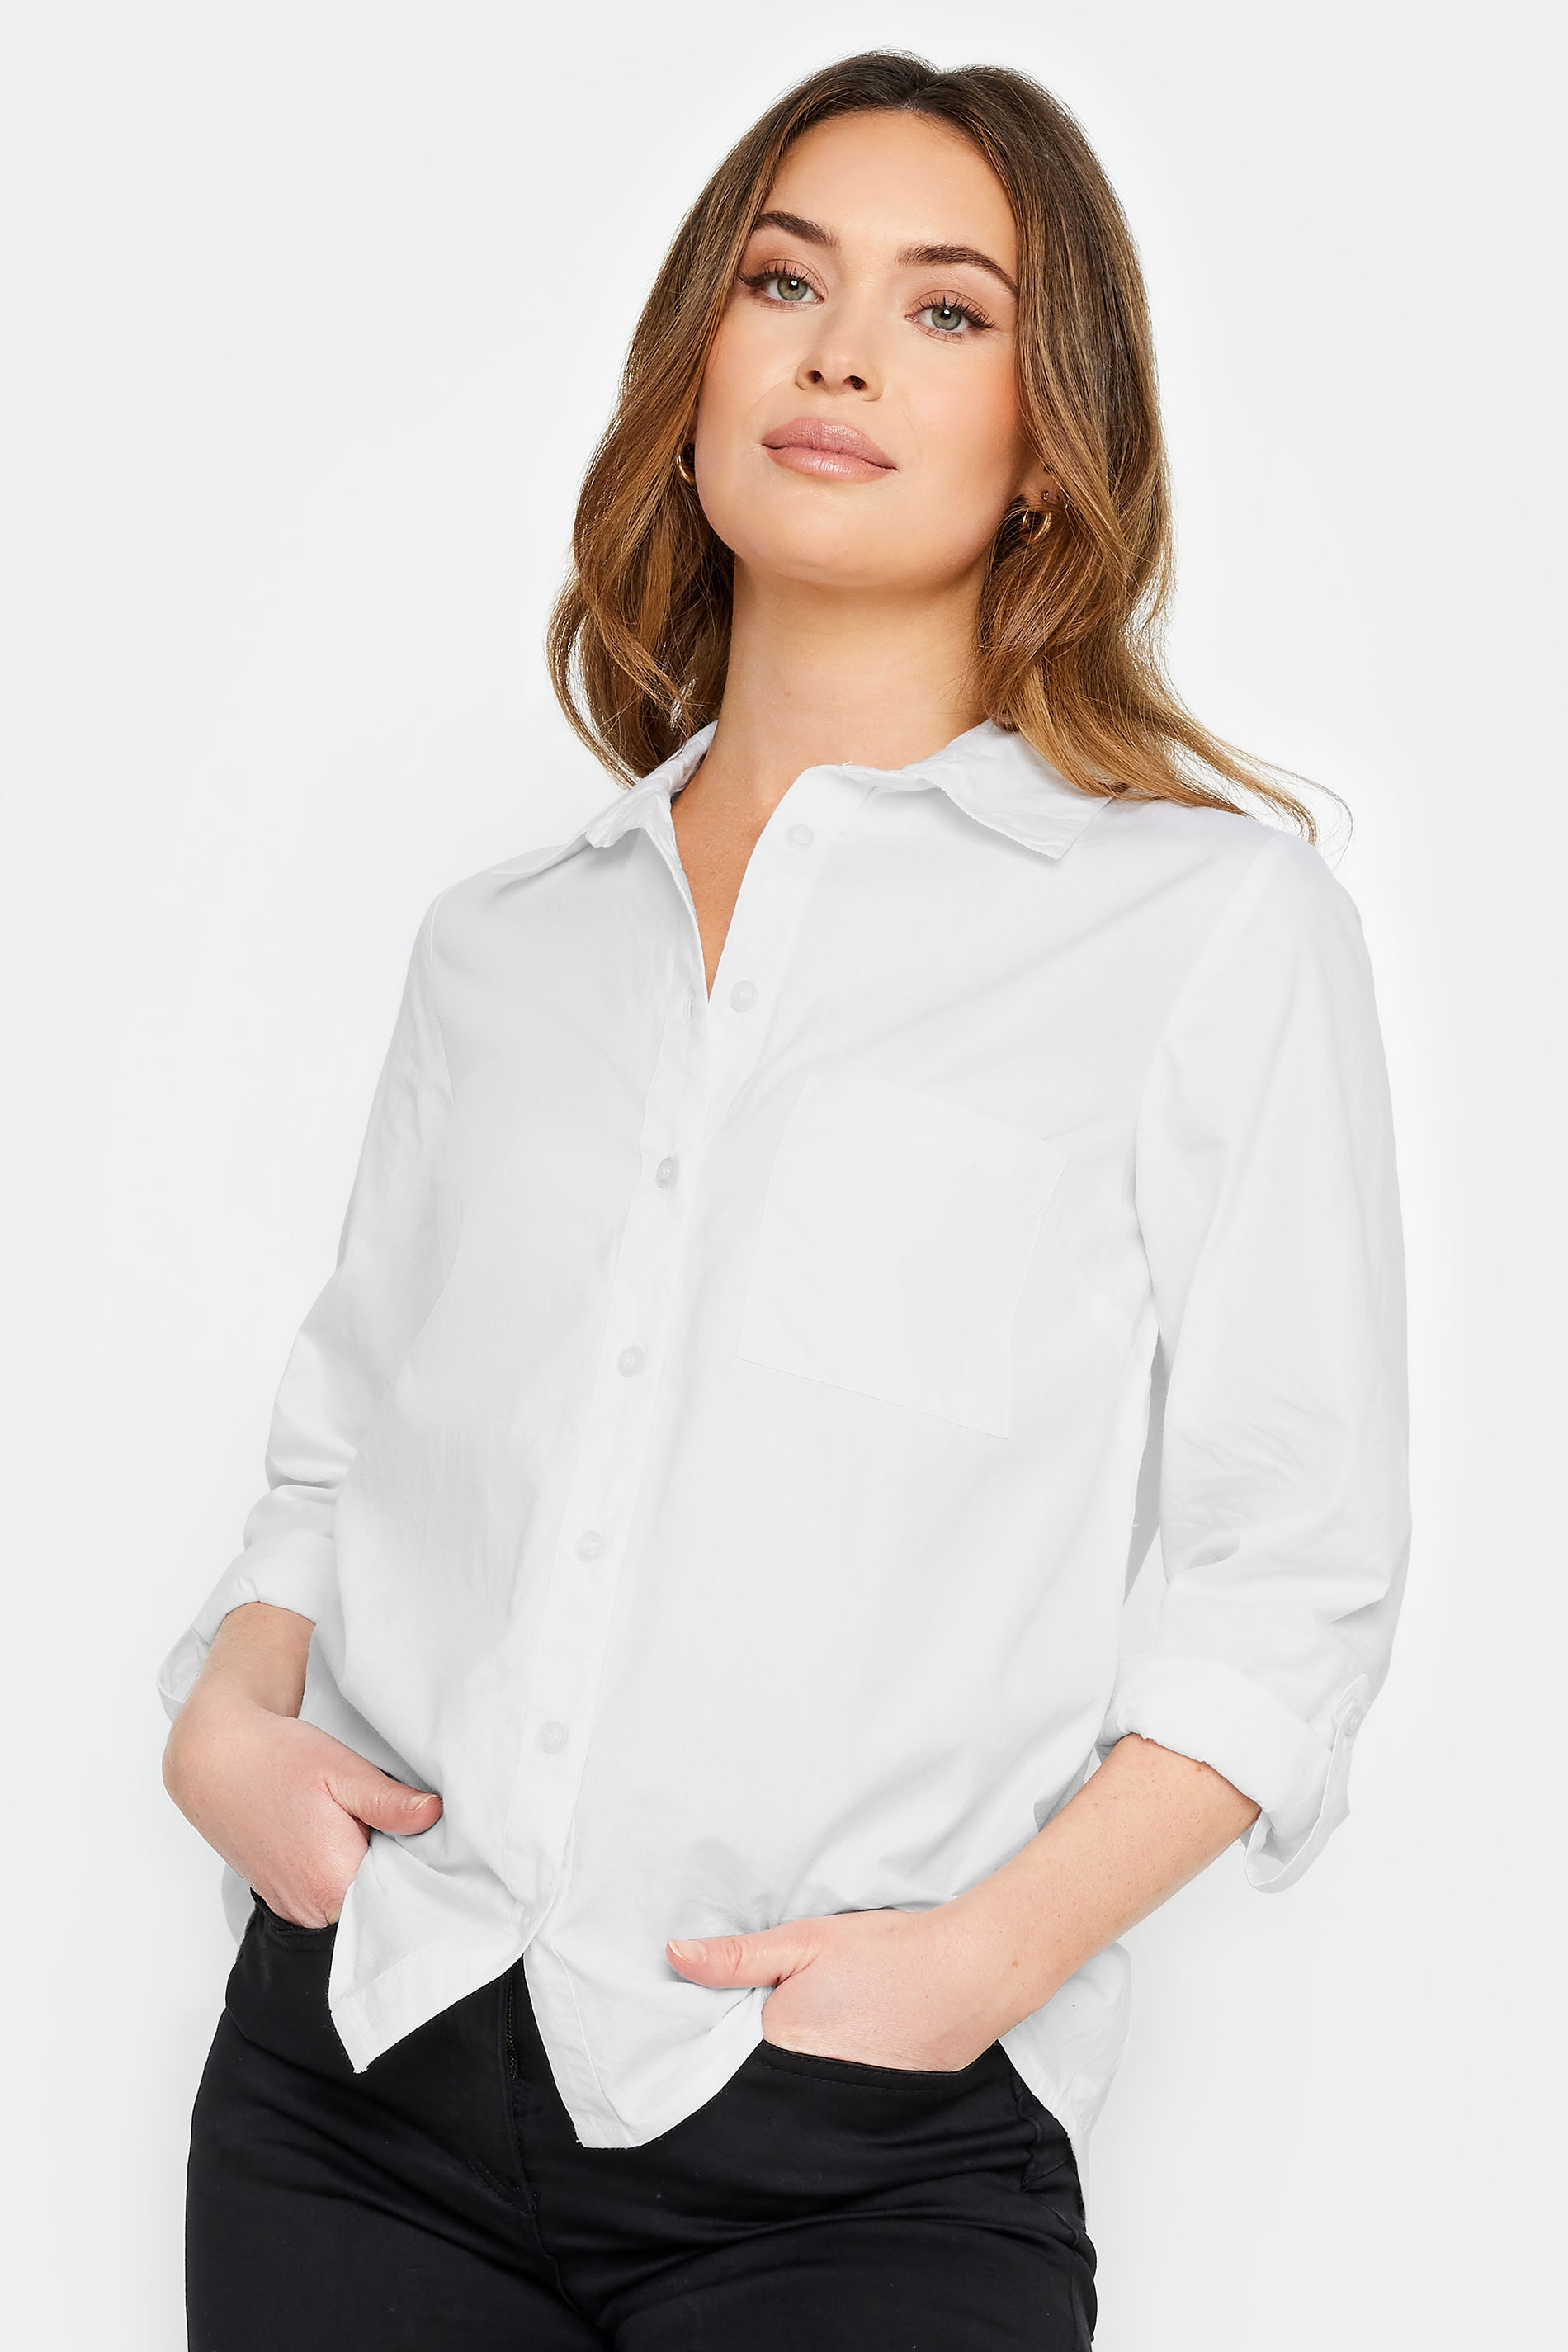 M&Co Petite White Oversized Cotton Poplin Shirt | M&Co